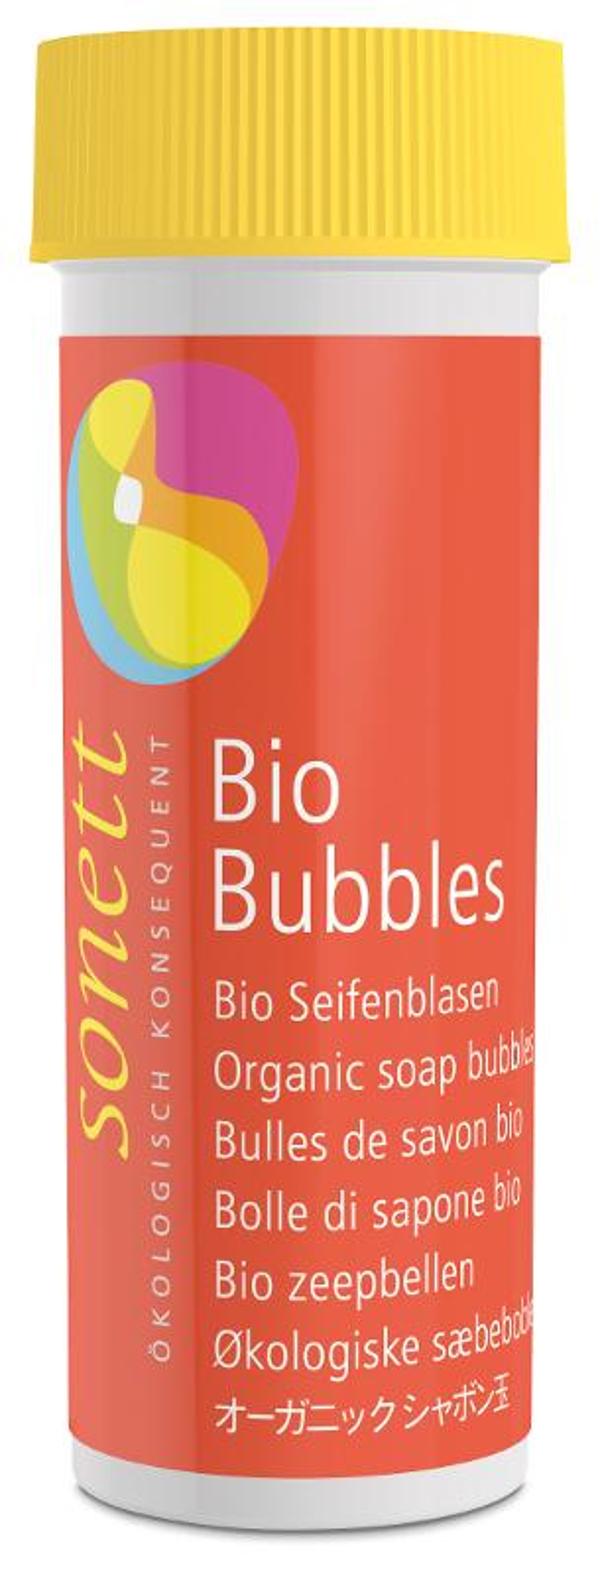 Produktfoto zu Bio Bubbles Seifenblasen